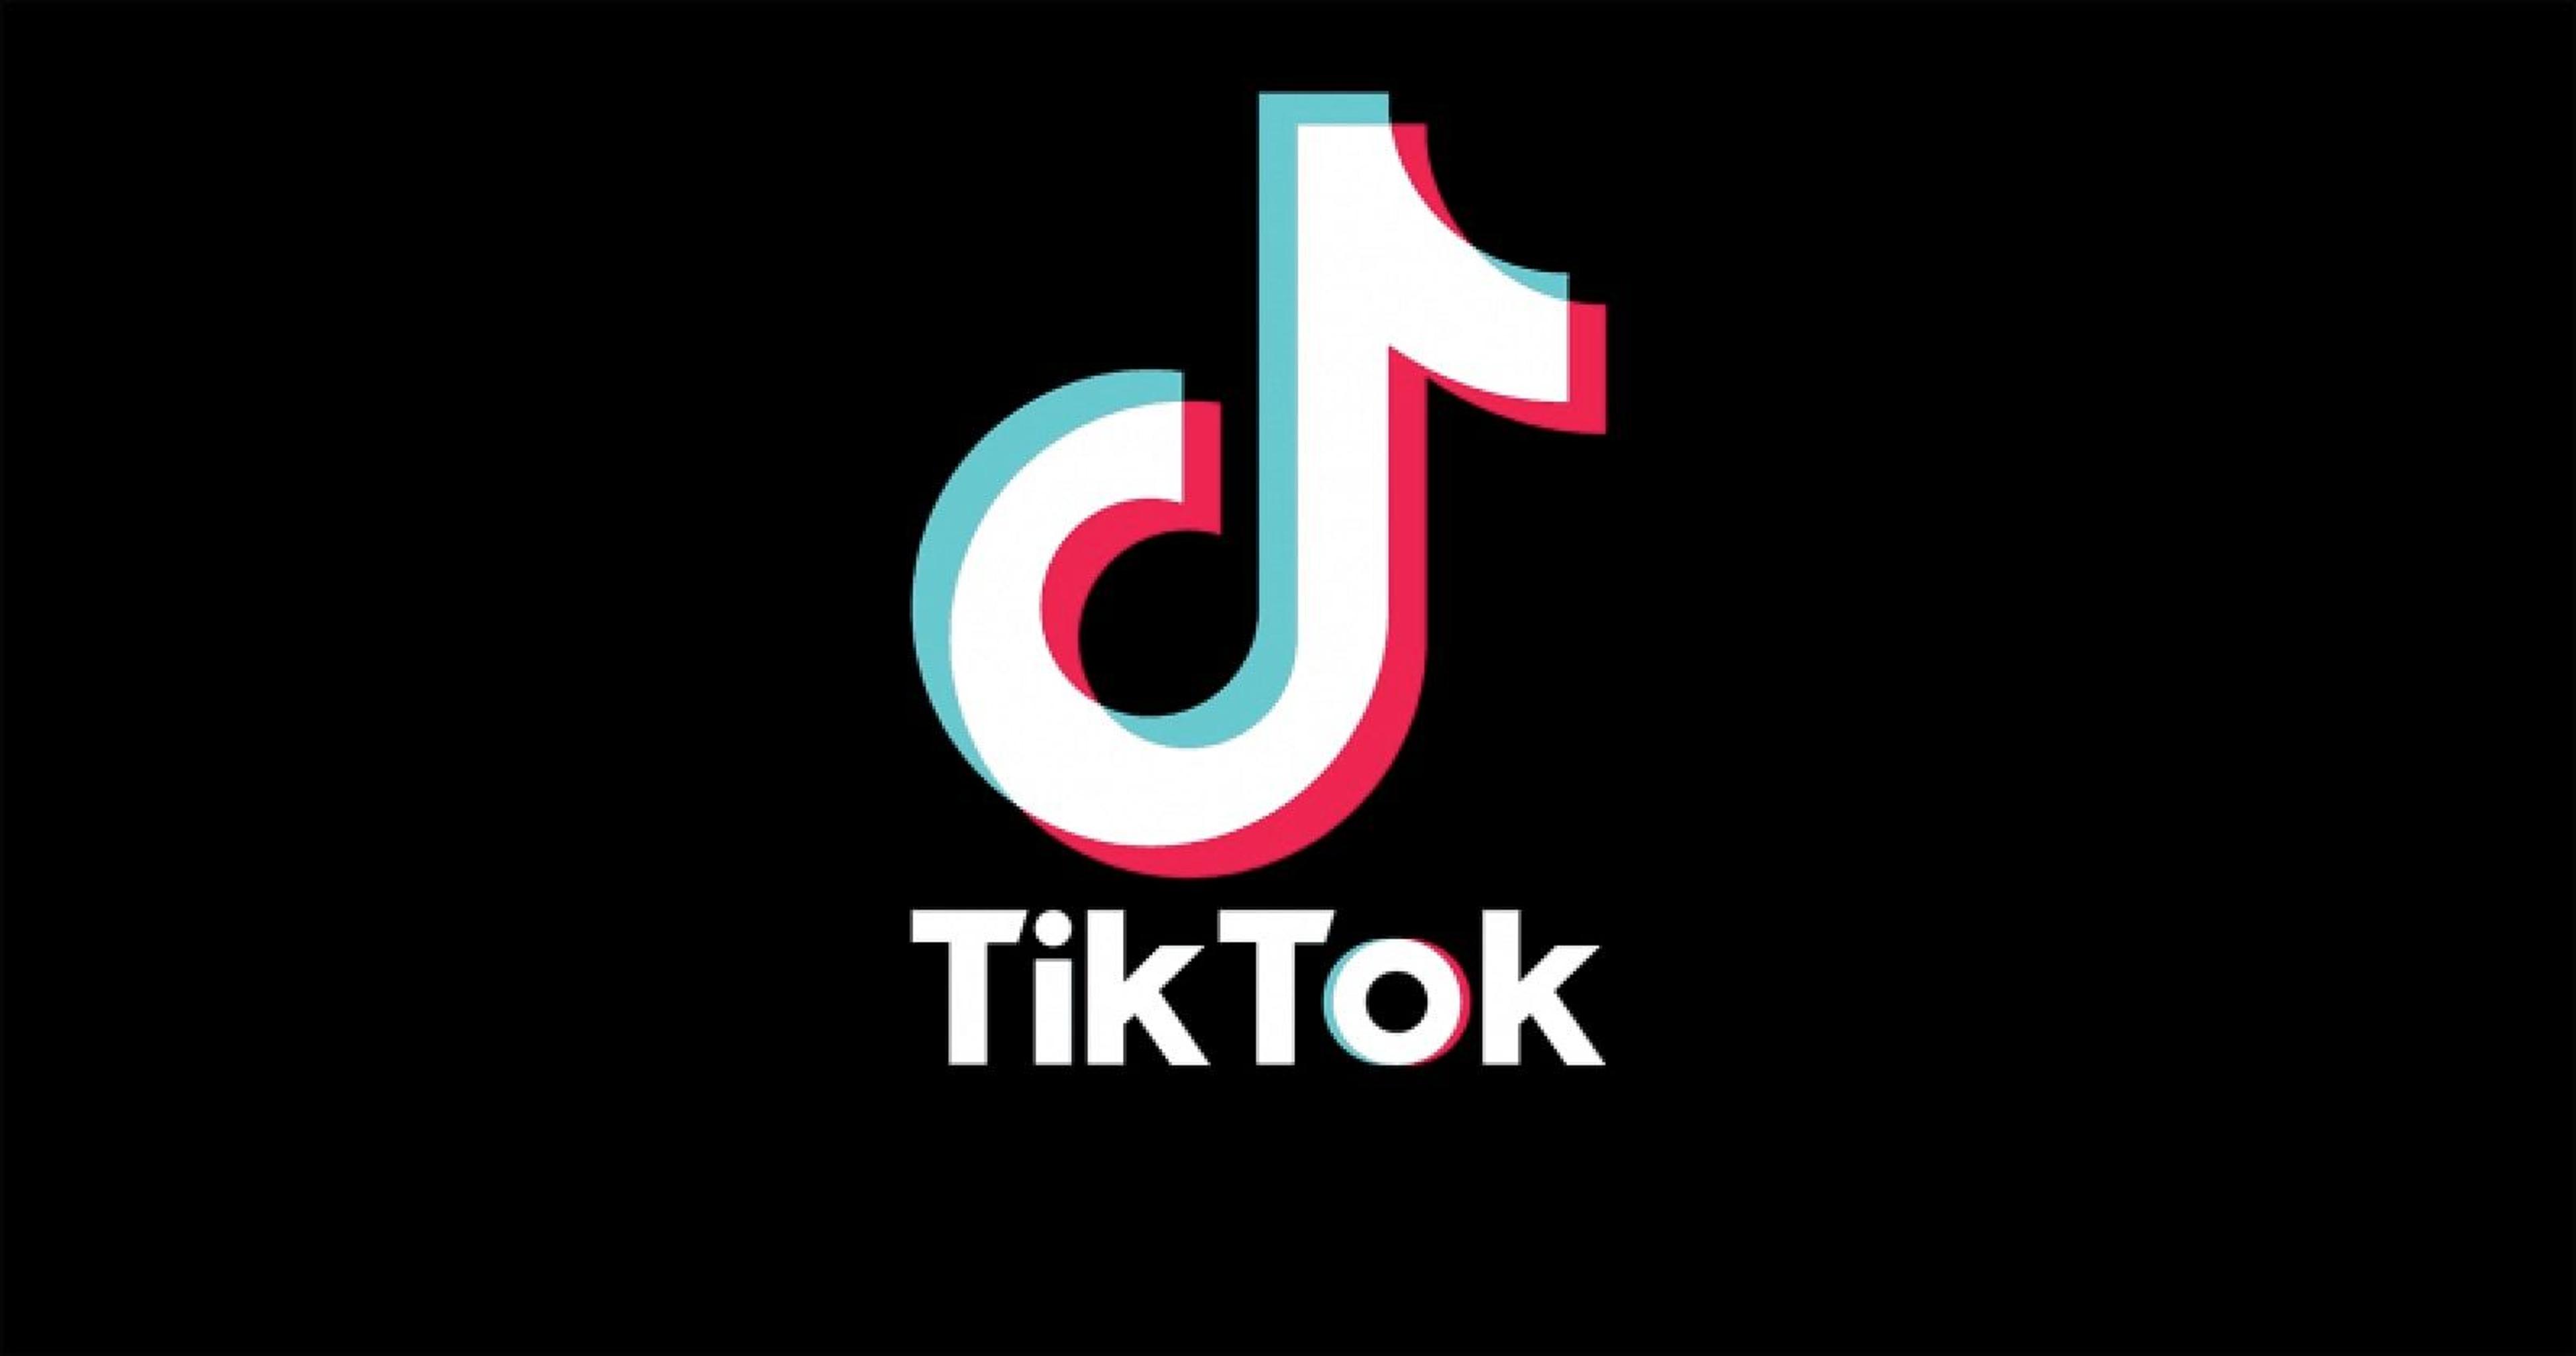 How to change Text to Speech voice on TikTok